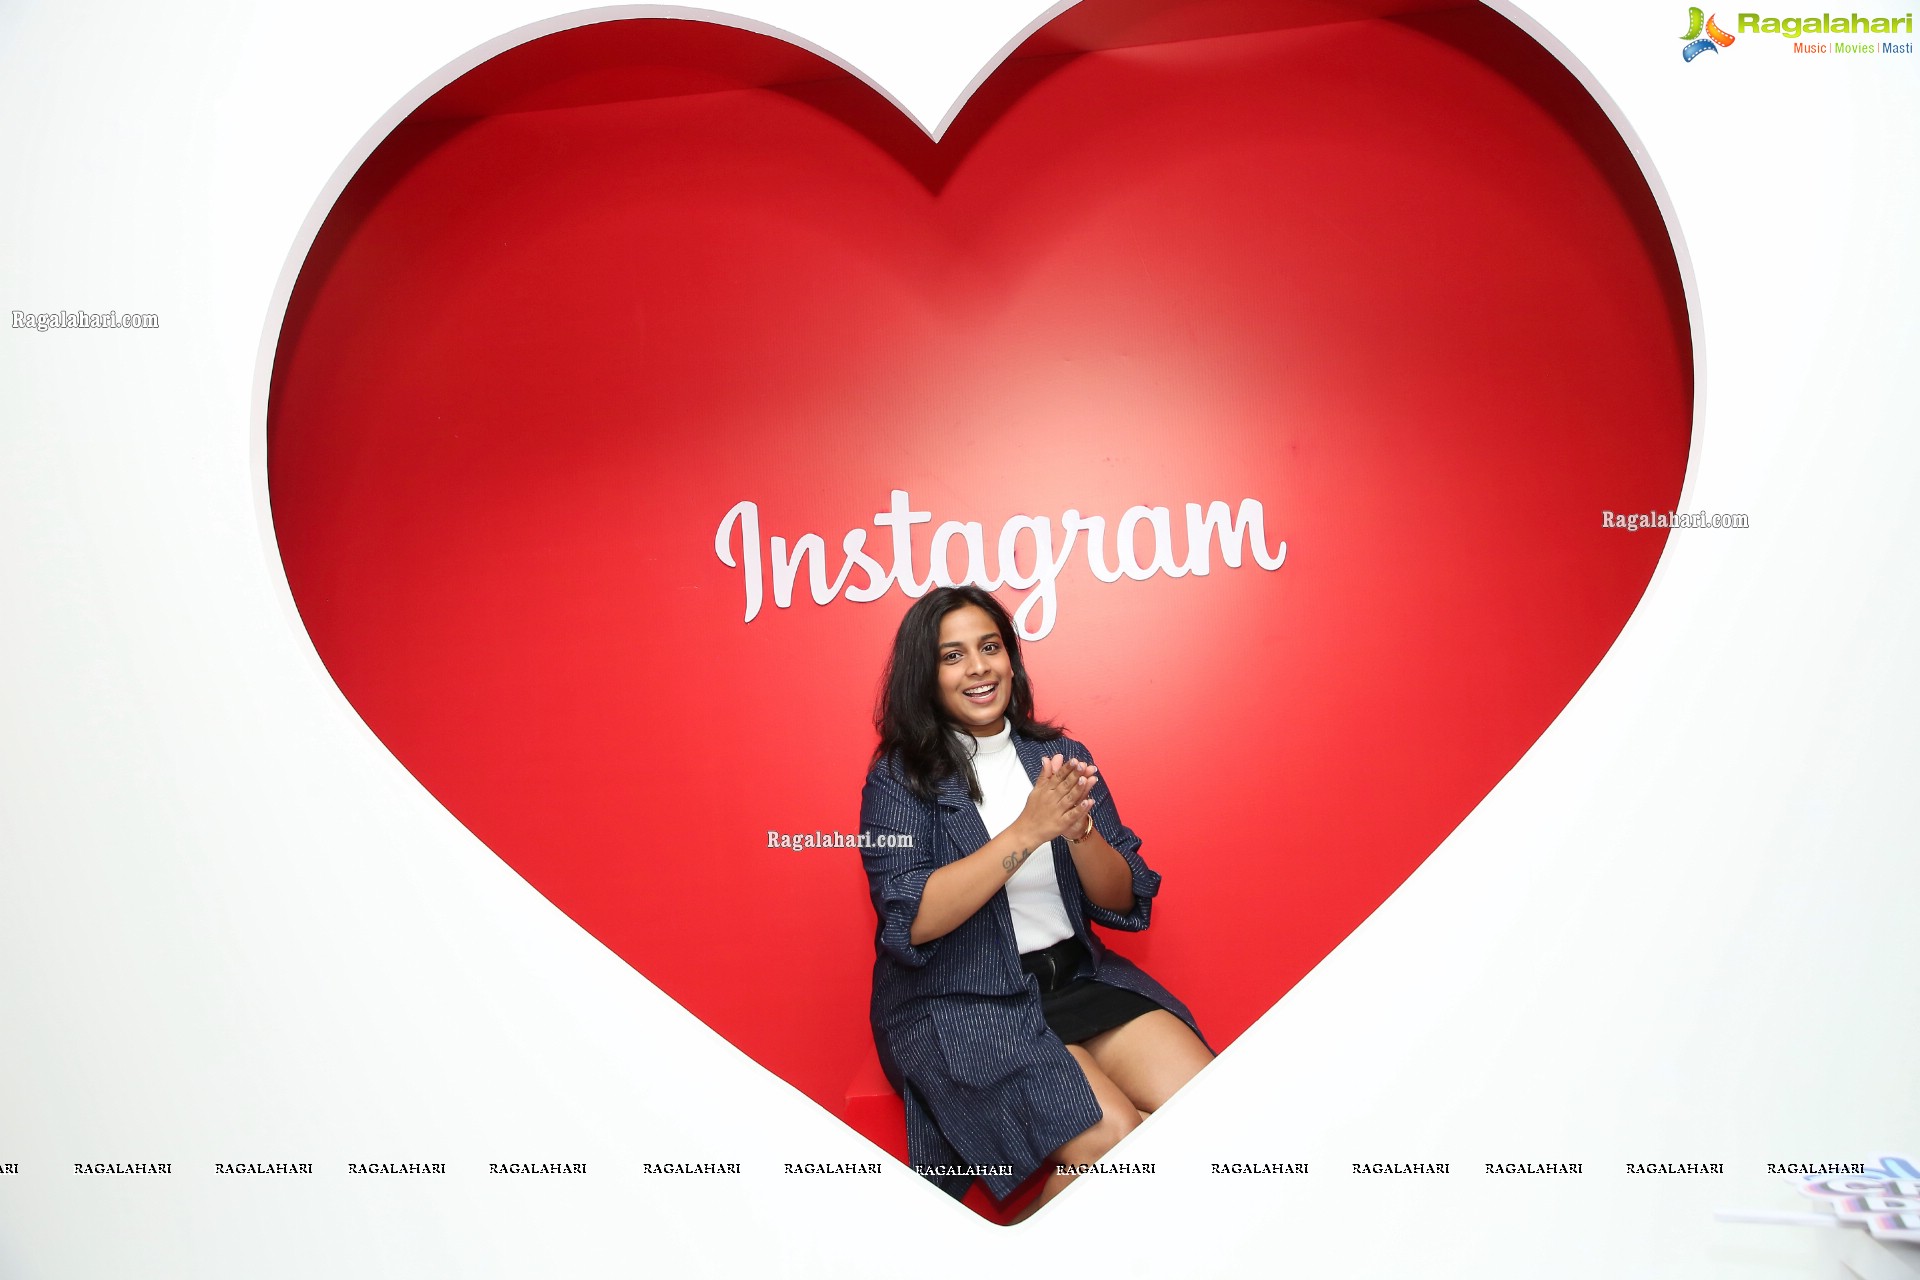 Mahathalli aka Jahnavi Dasetty at ‘Born on Instagram’ Launch in Hyderabad